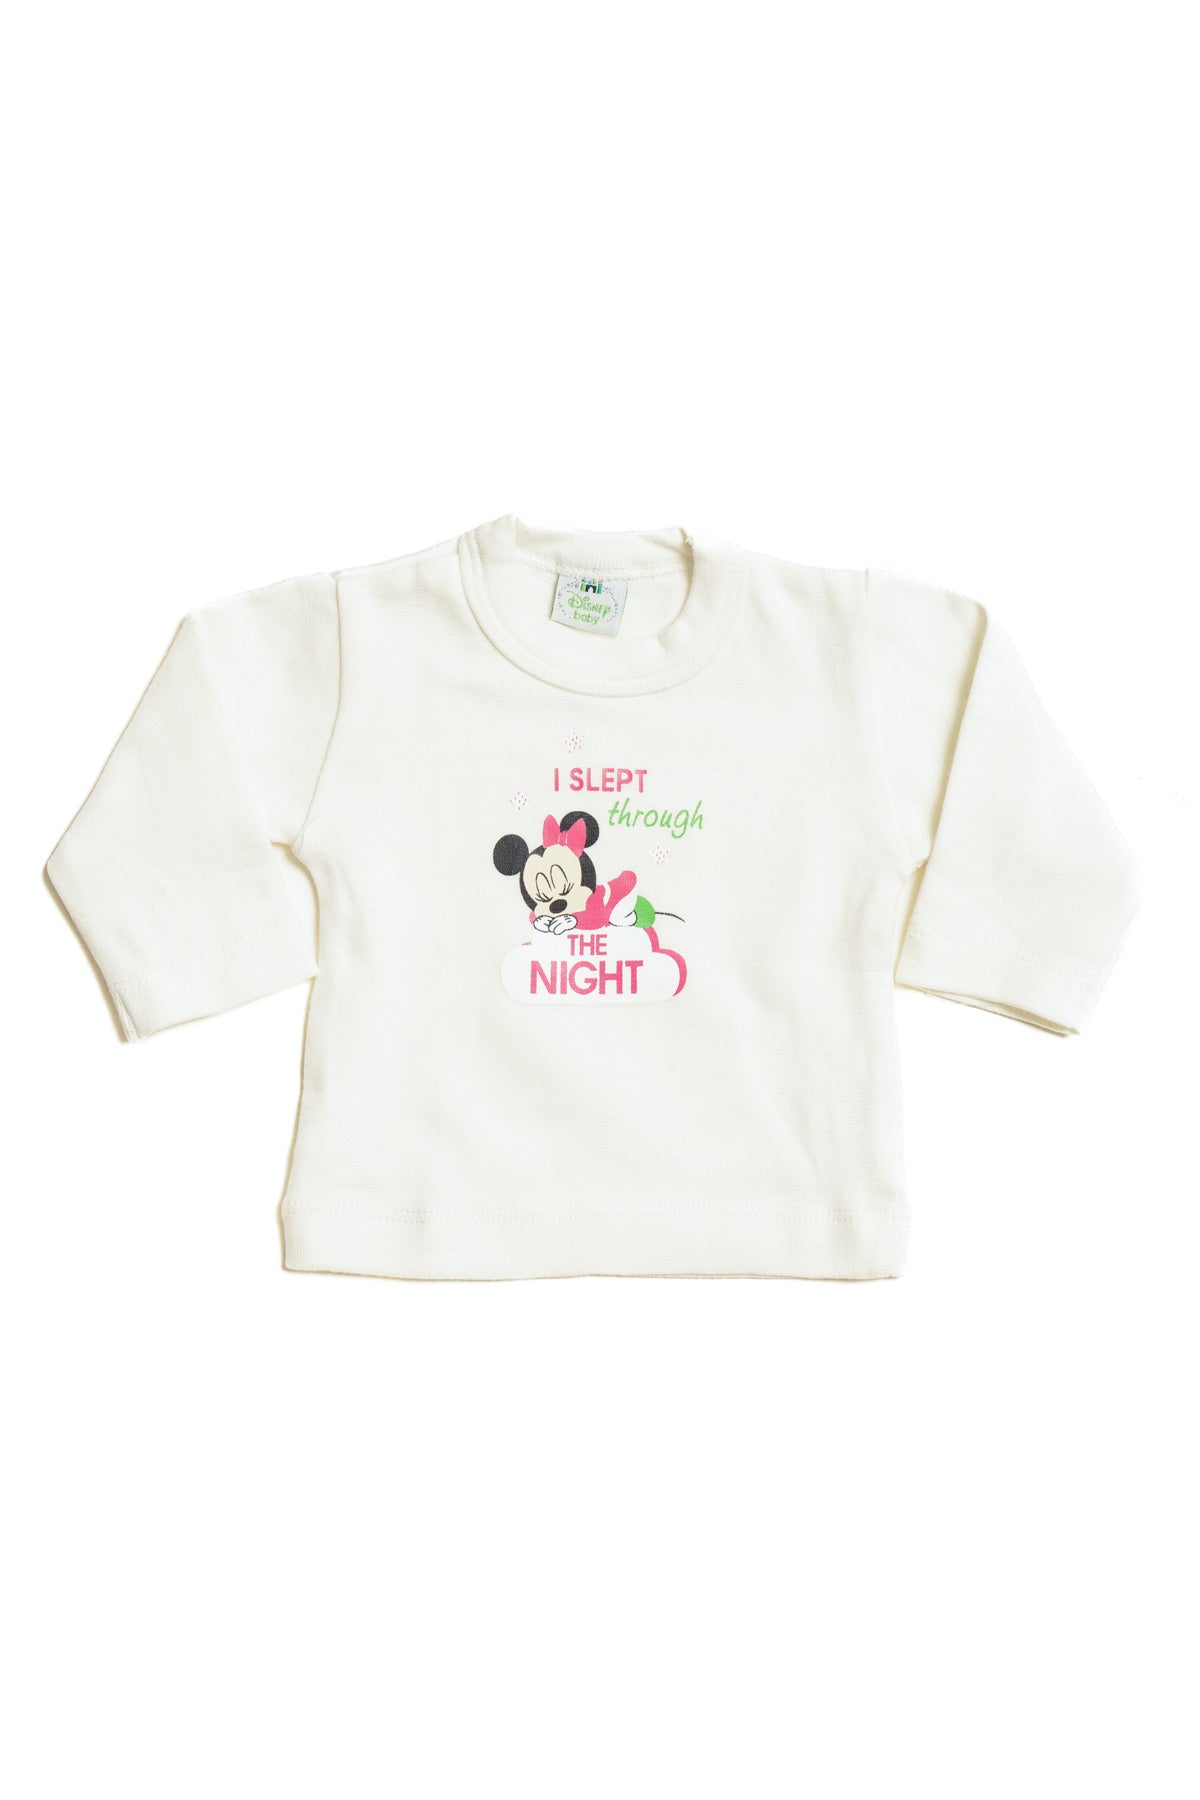 T-Shirt Baby Minnie " The Night" Sleeve 4123